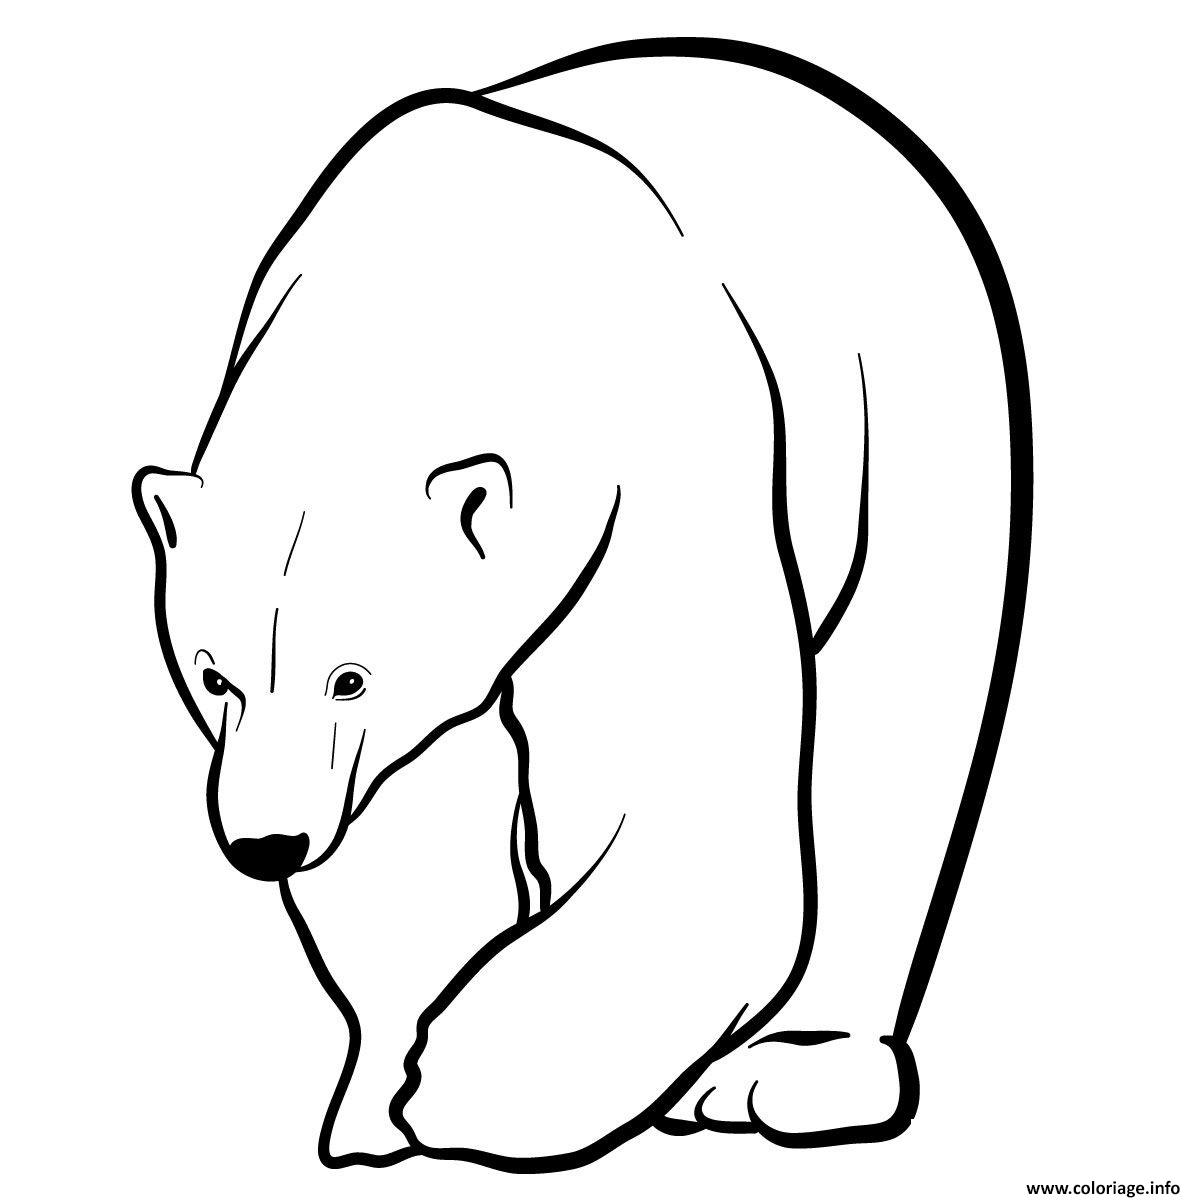 Coloriage Polar Bear Dessin à Imprimer